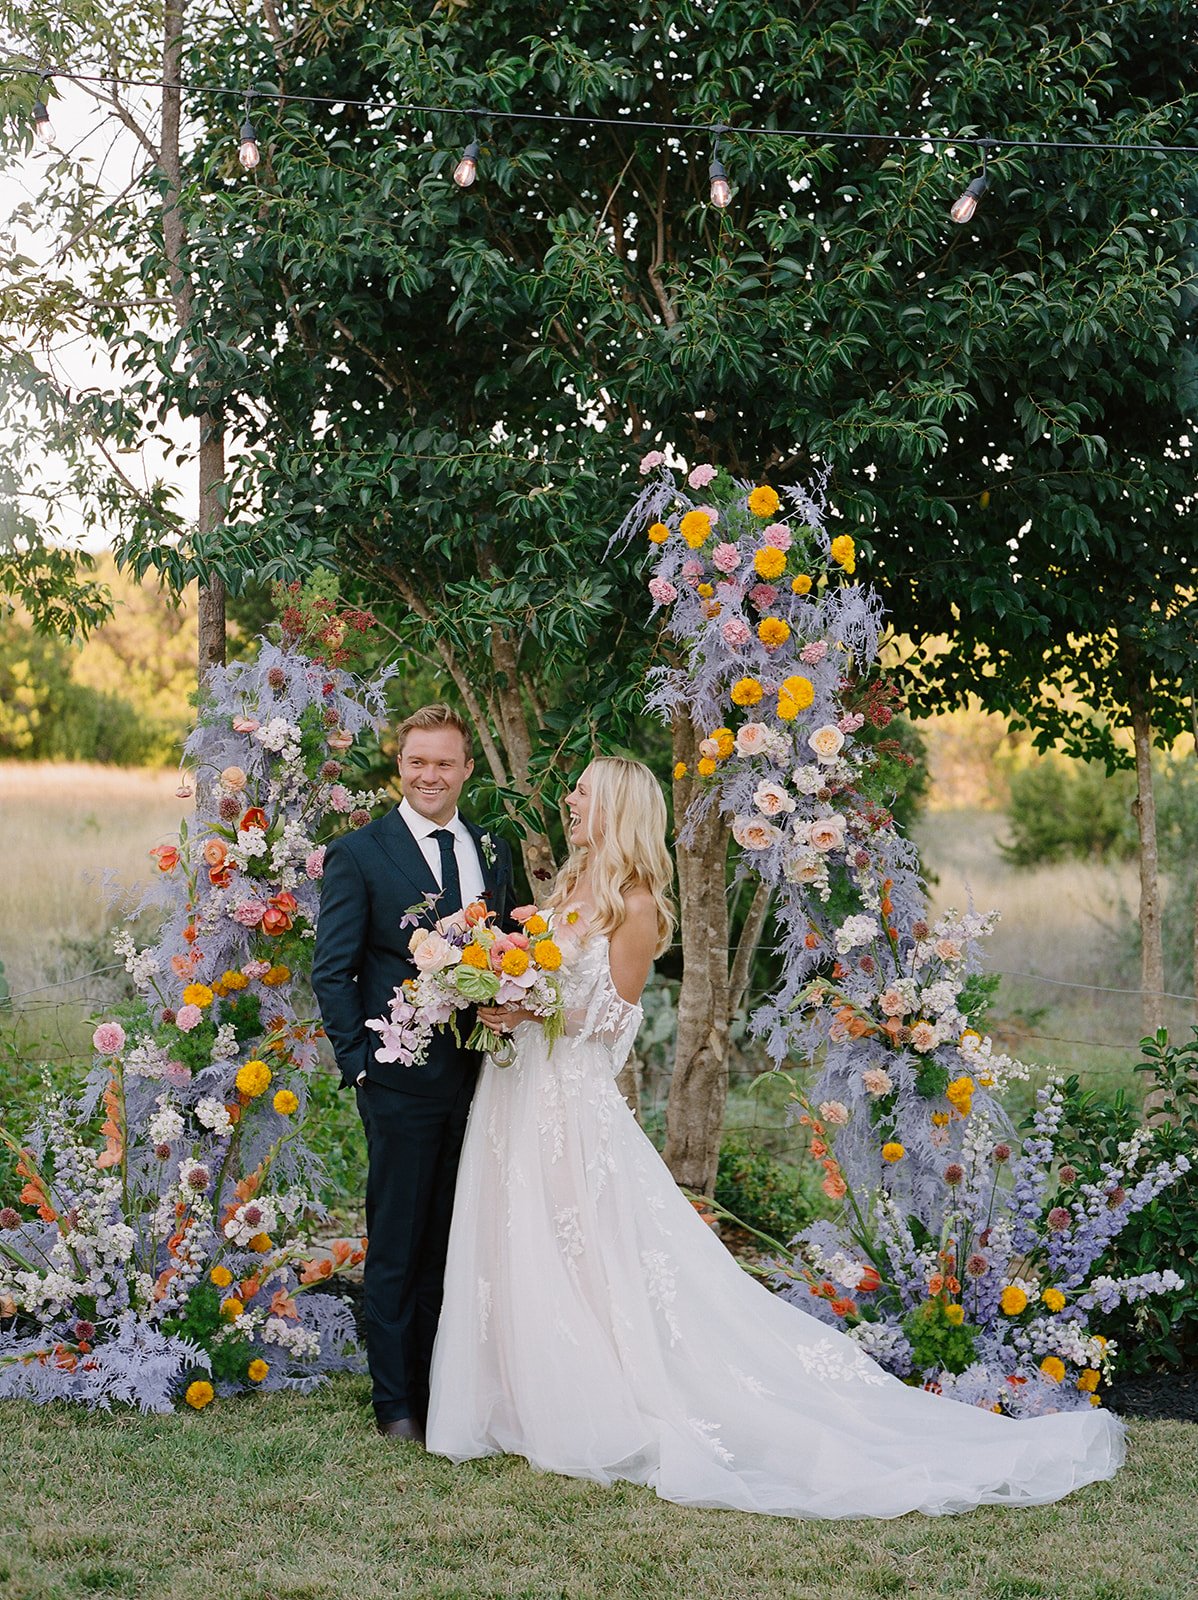 Best-Austin-Wedding-Photographers-Elopement-Film-35mm-Asheville-Santa-Barbara-Backyard-98.jpg